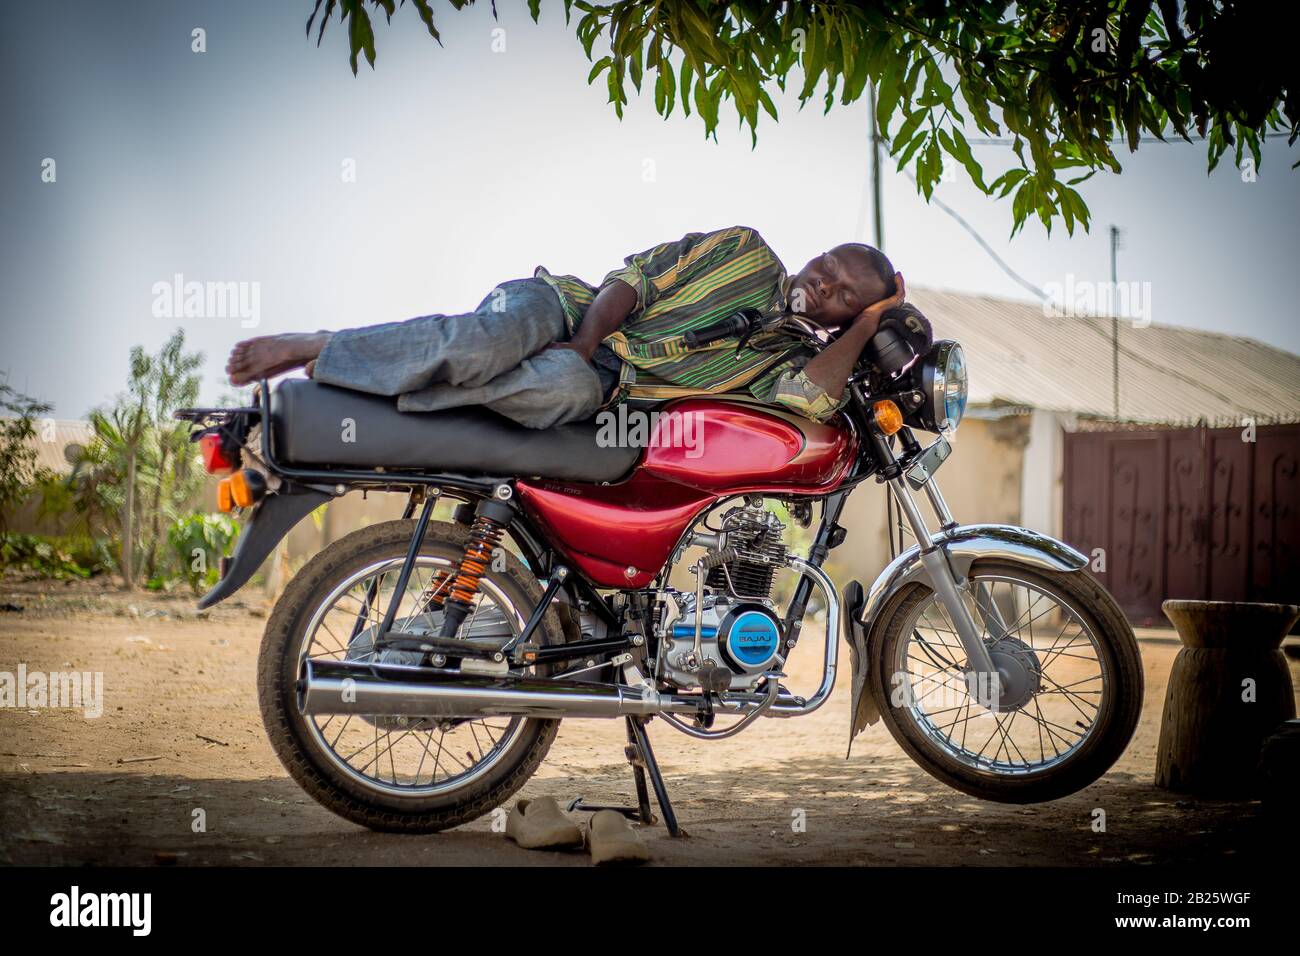 Motorcycle taxi (okada) drivers take a nap on their bikes in Nigeria. Stock Photo